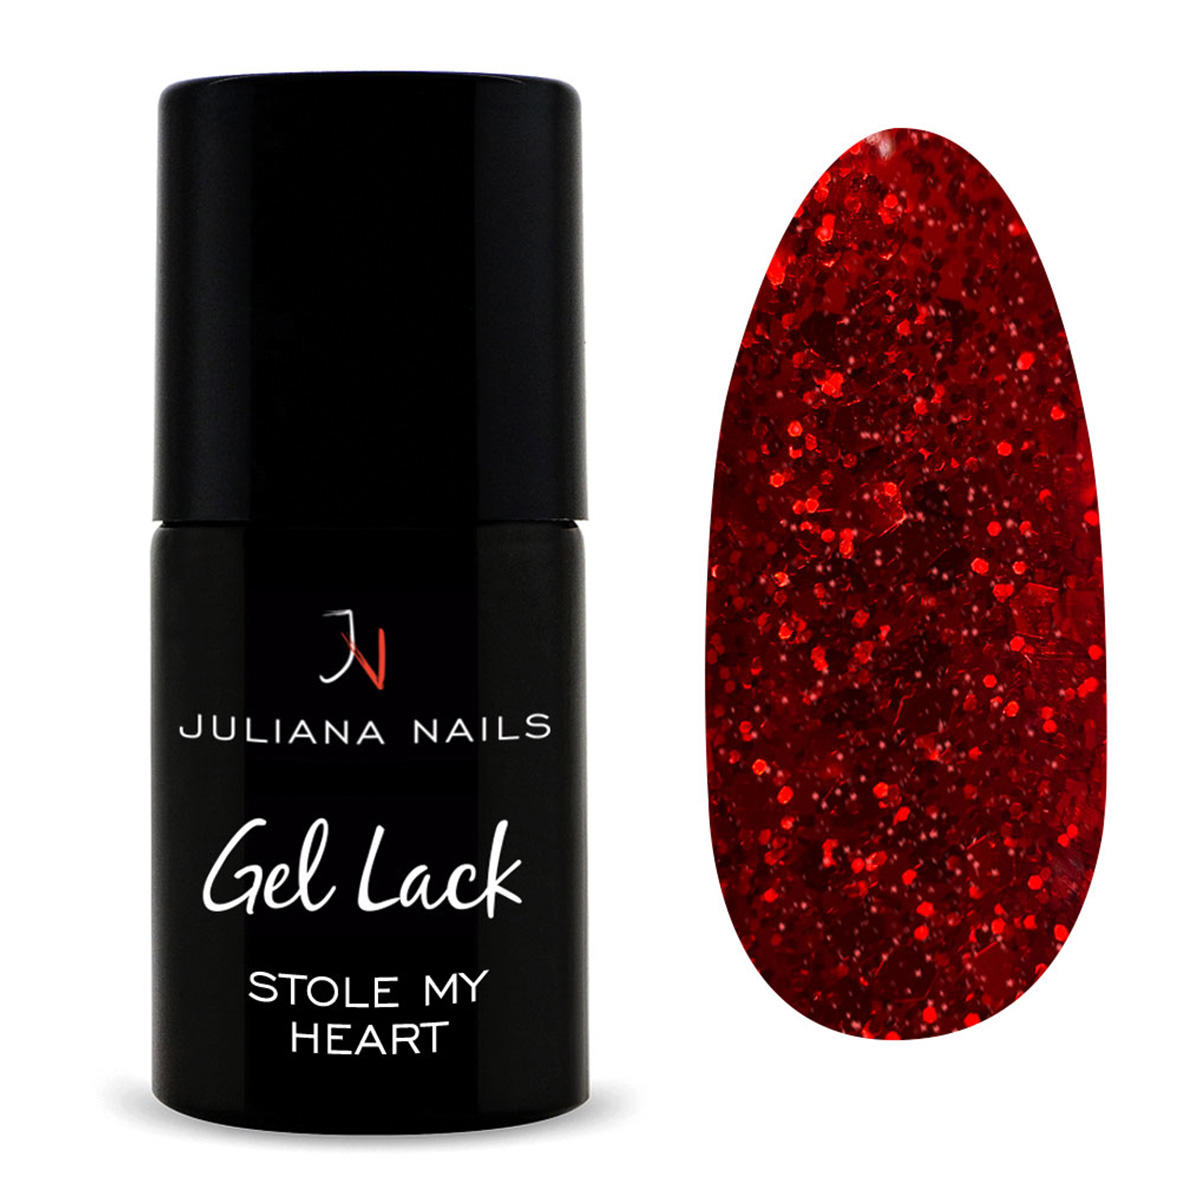 Juliana Nails Gel Lack Glitter/Shimmer Stole My Heart, Flasche 6 ml - 1